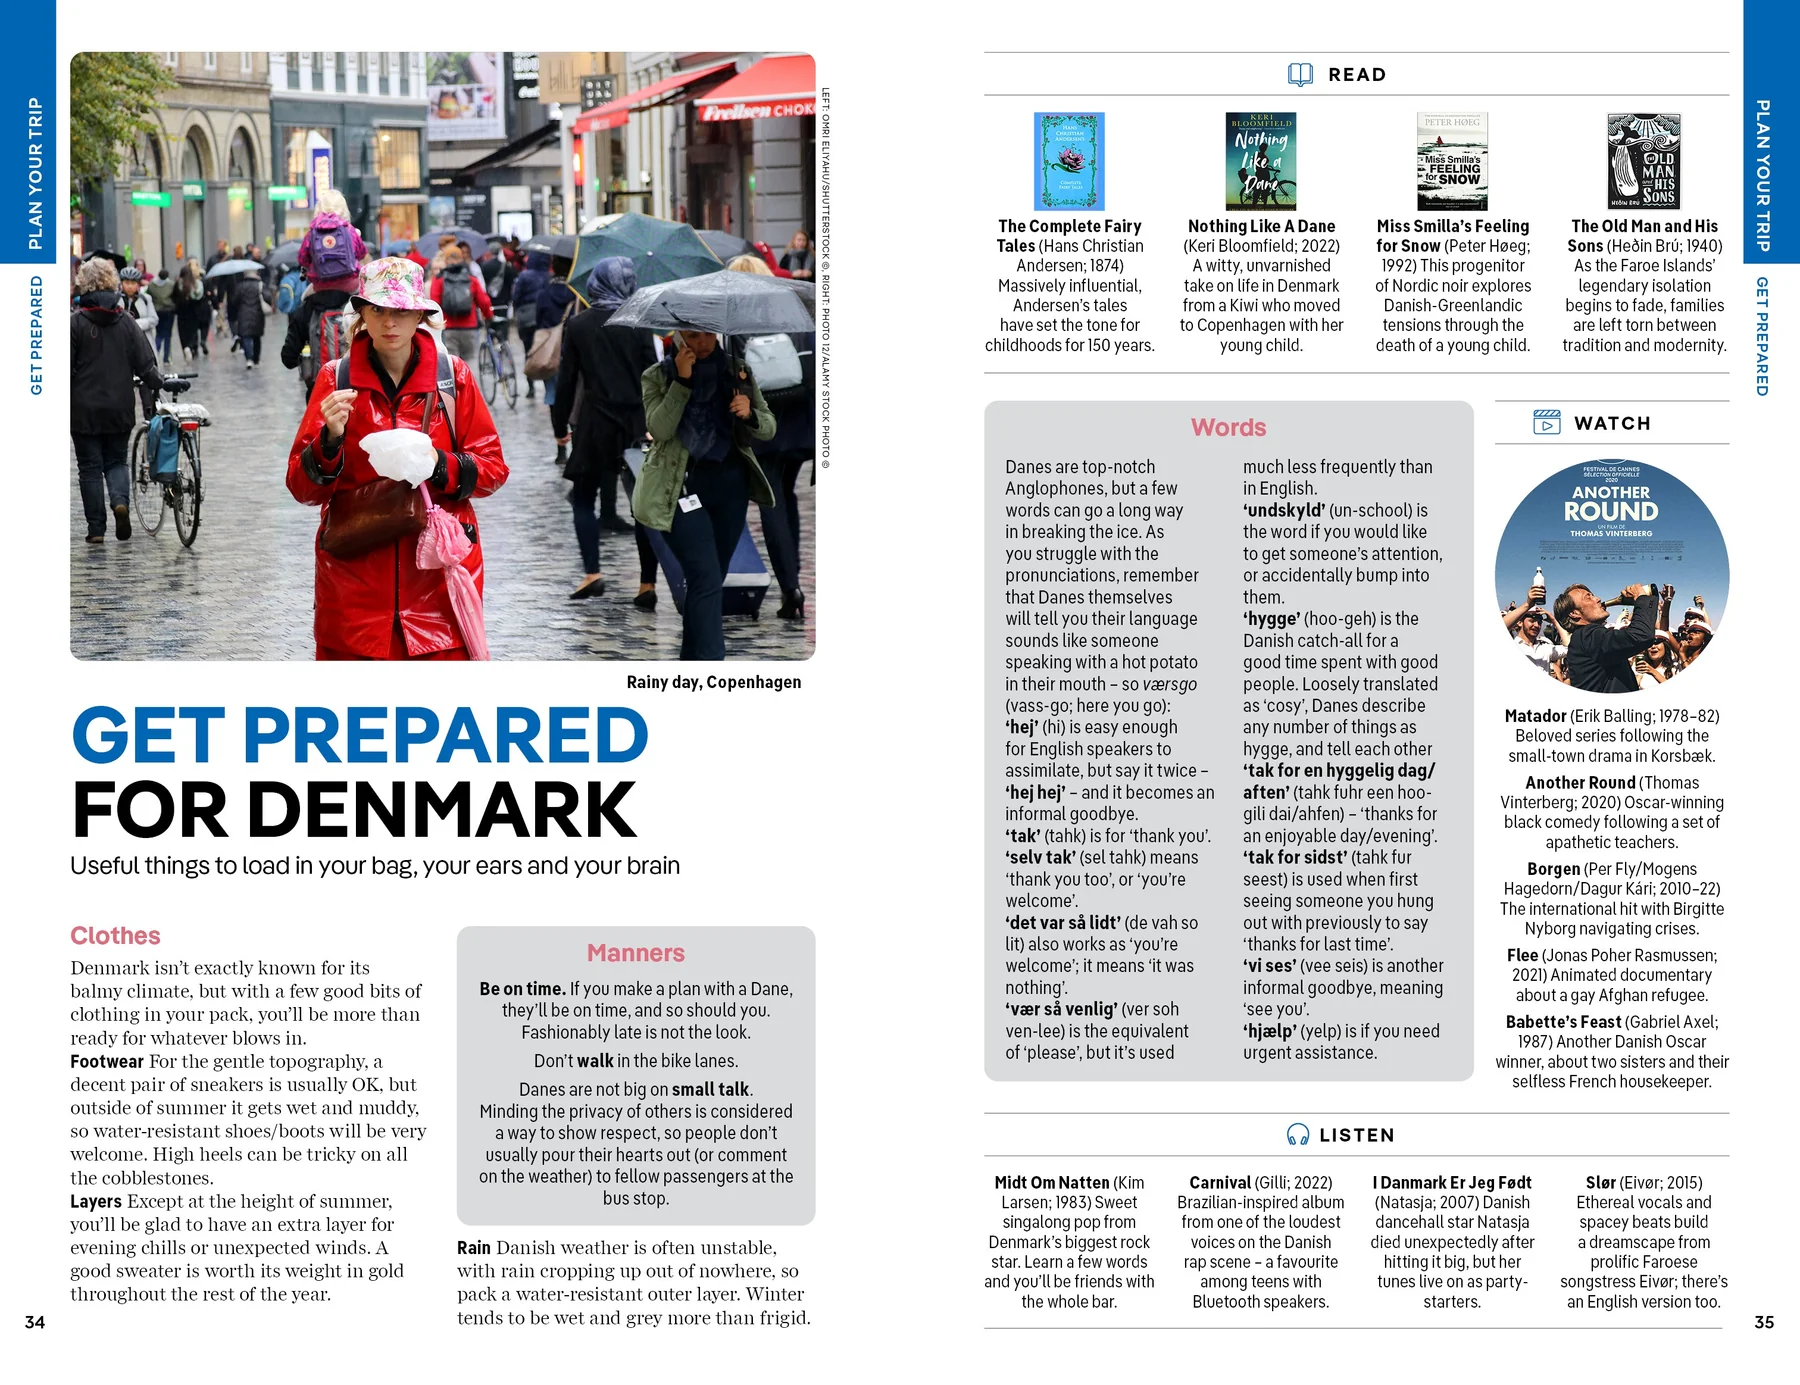 Denmark Lonely Planet